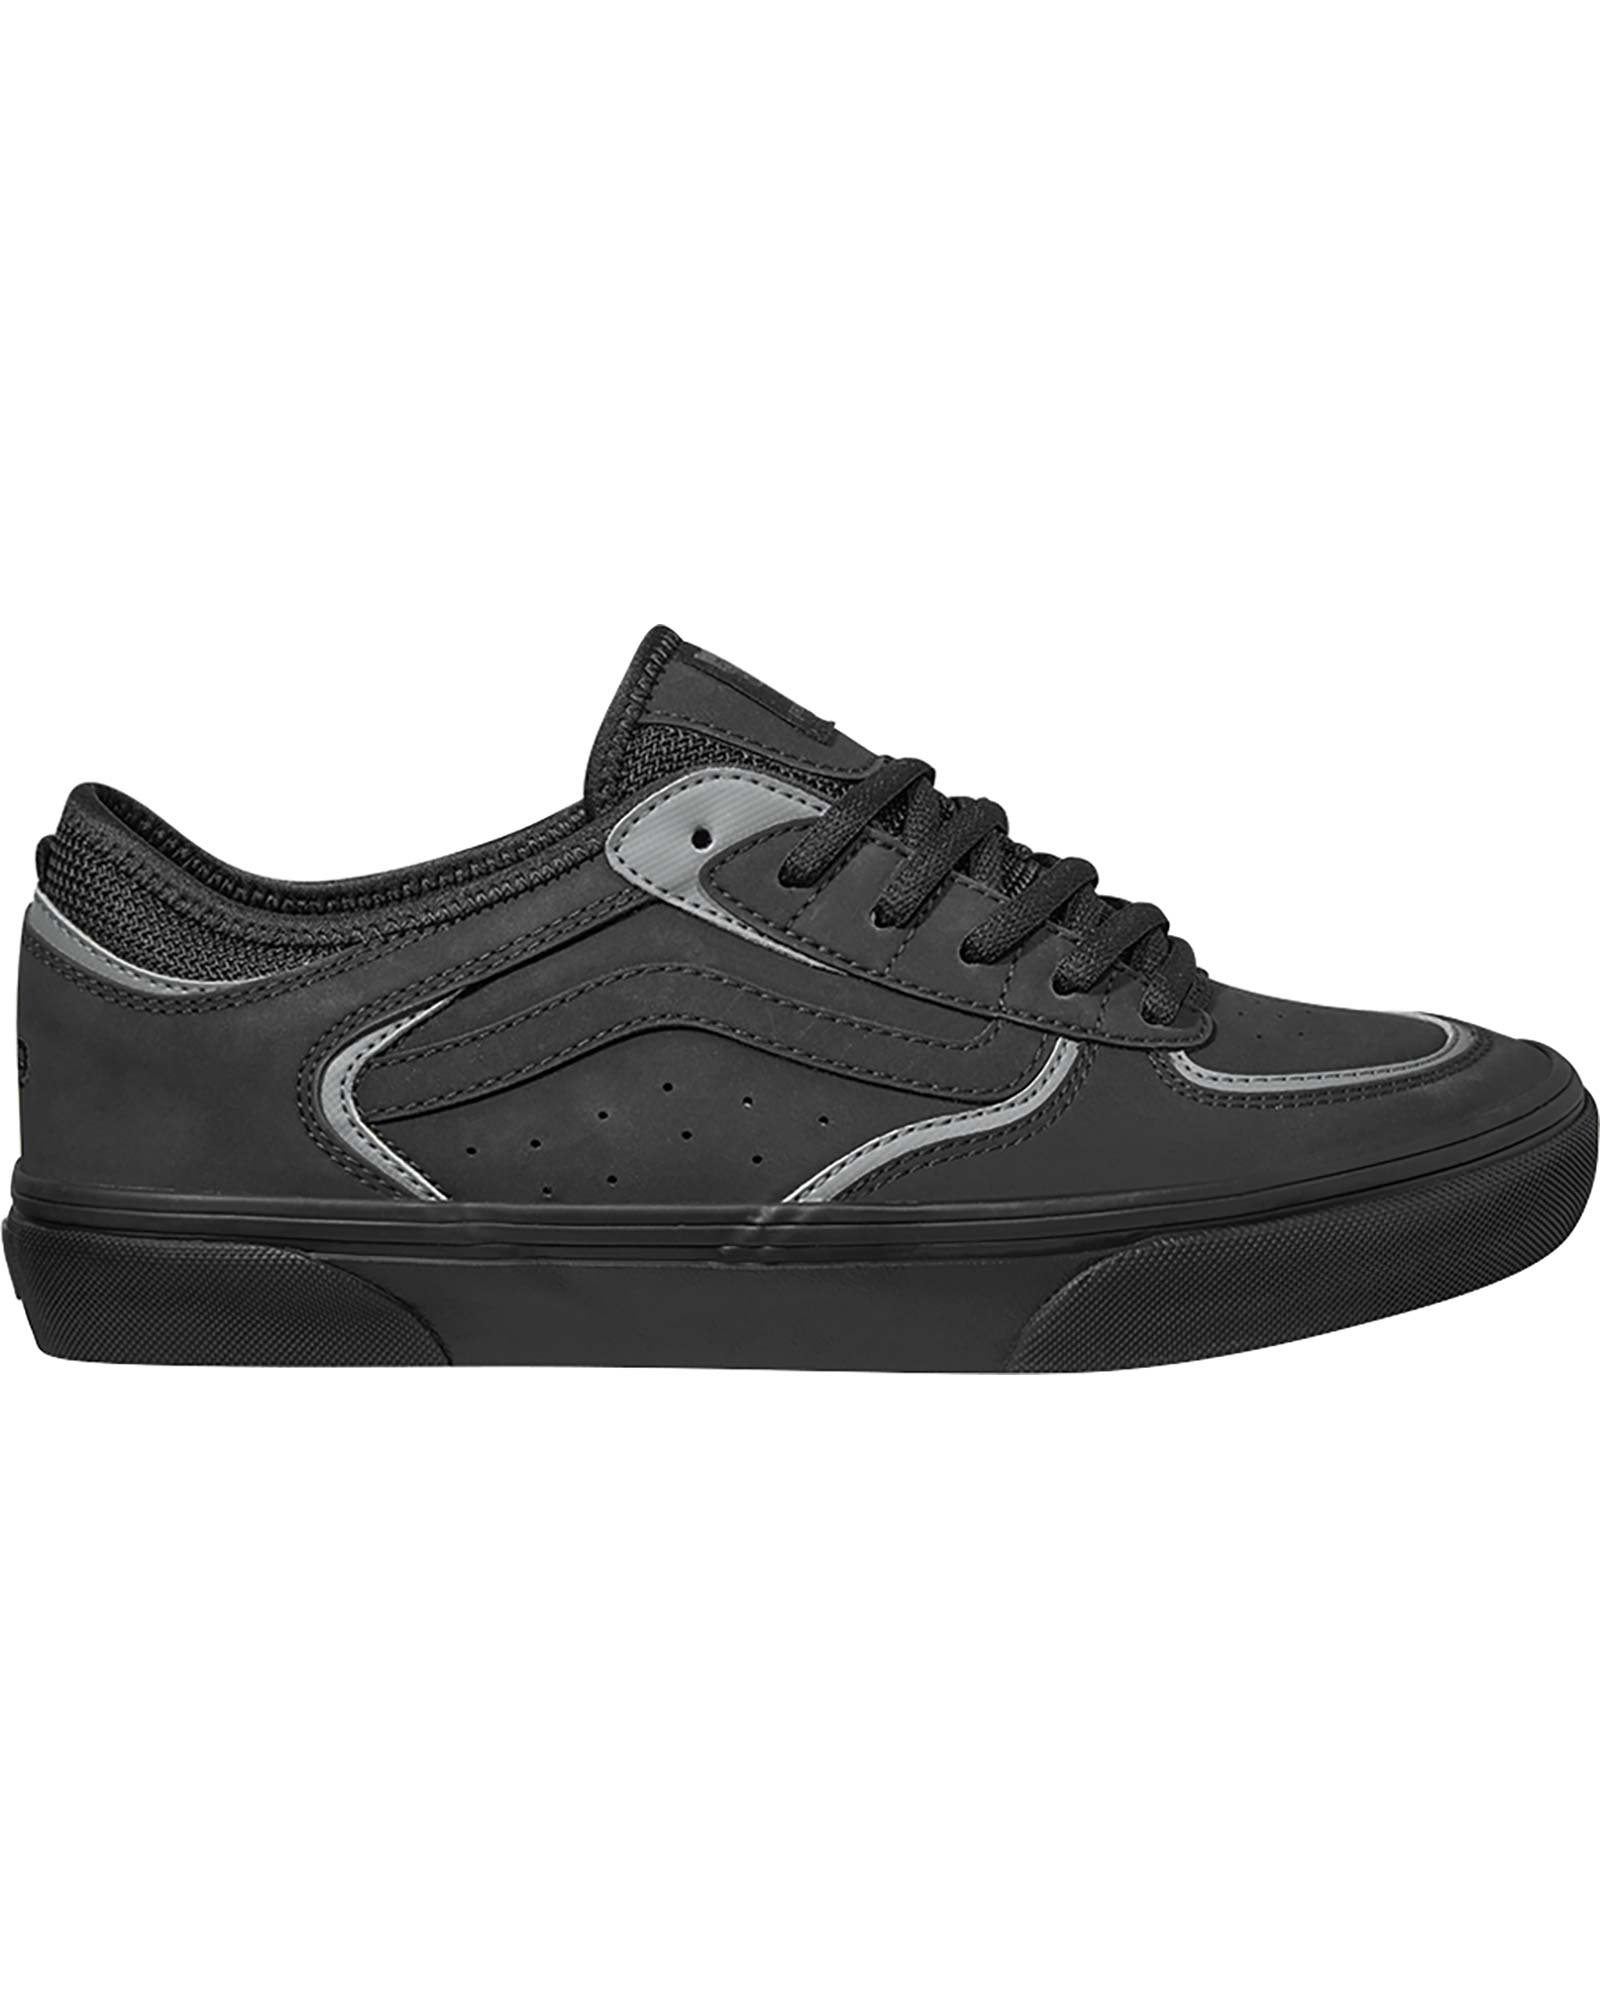 Vans Men's Skate Rowley Shoes